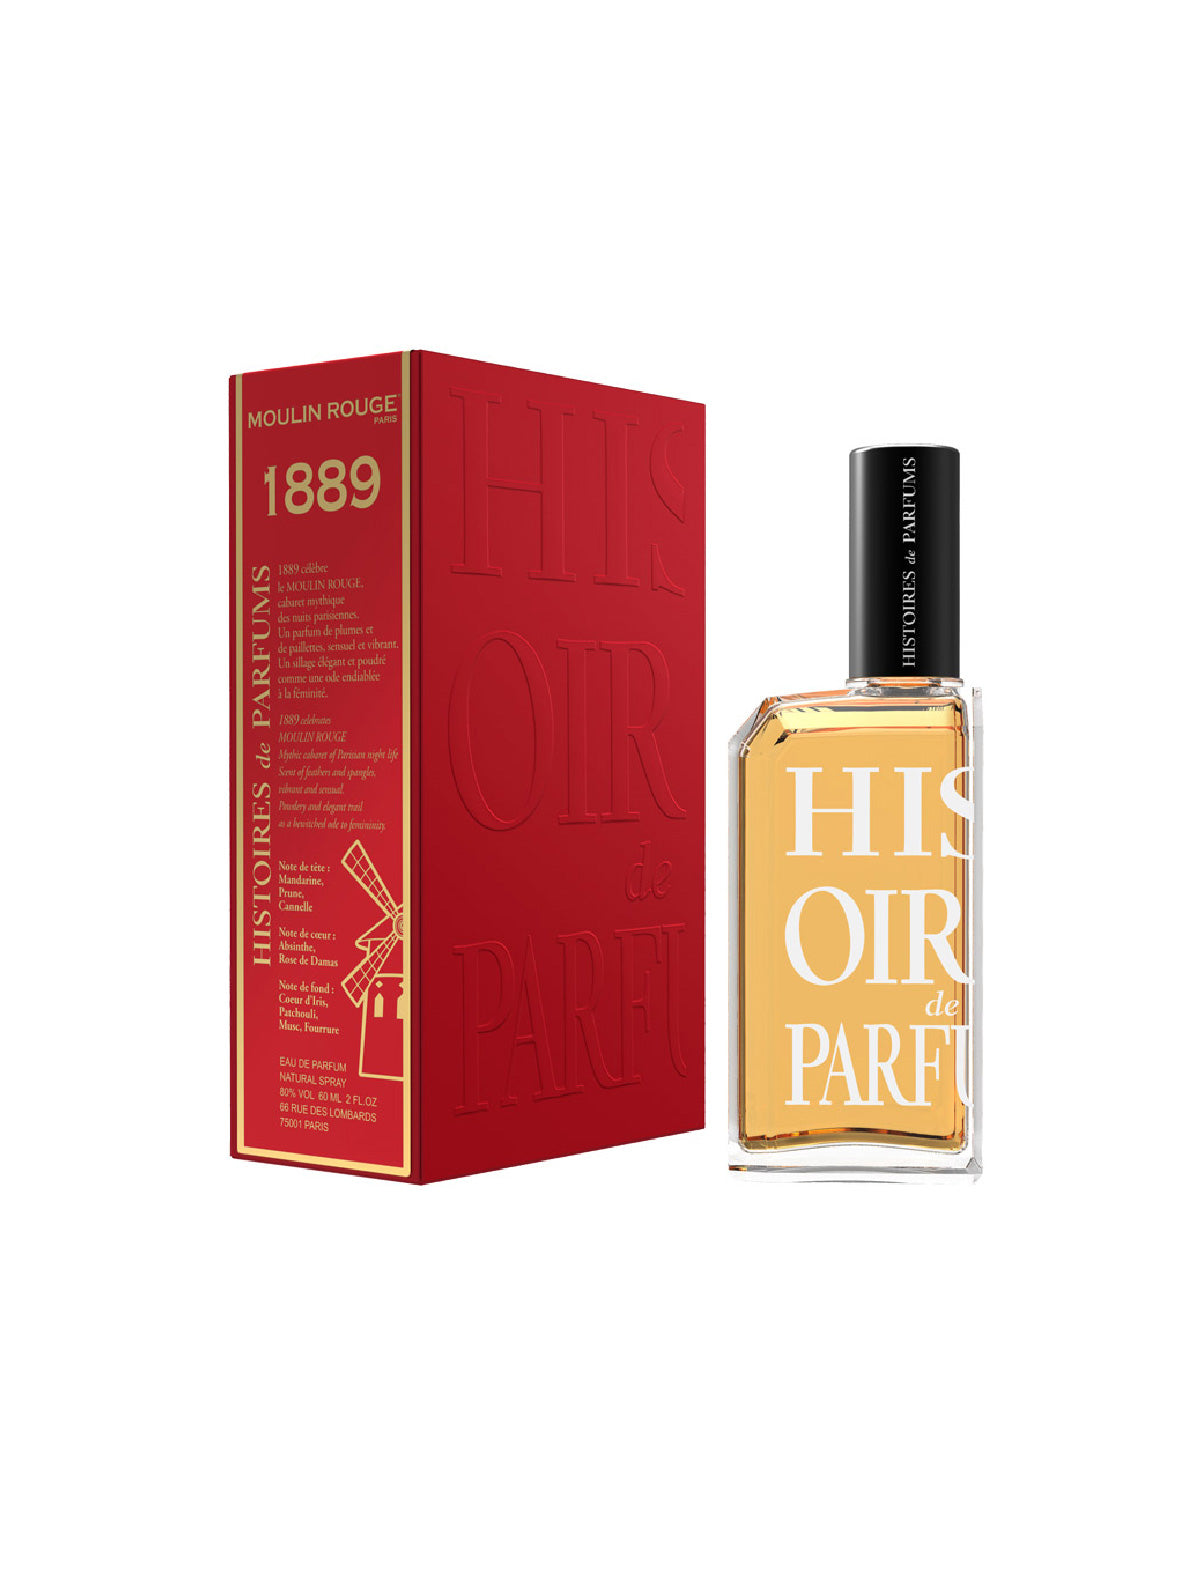 Profumo Perfume Stories 1889 Mouline Rouge 60 ML